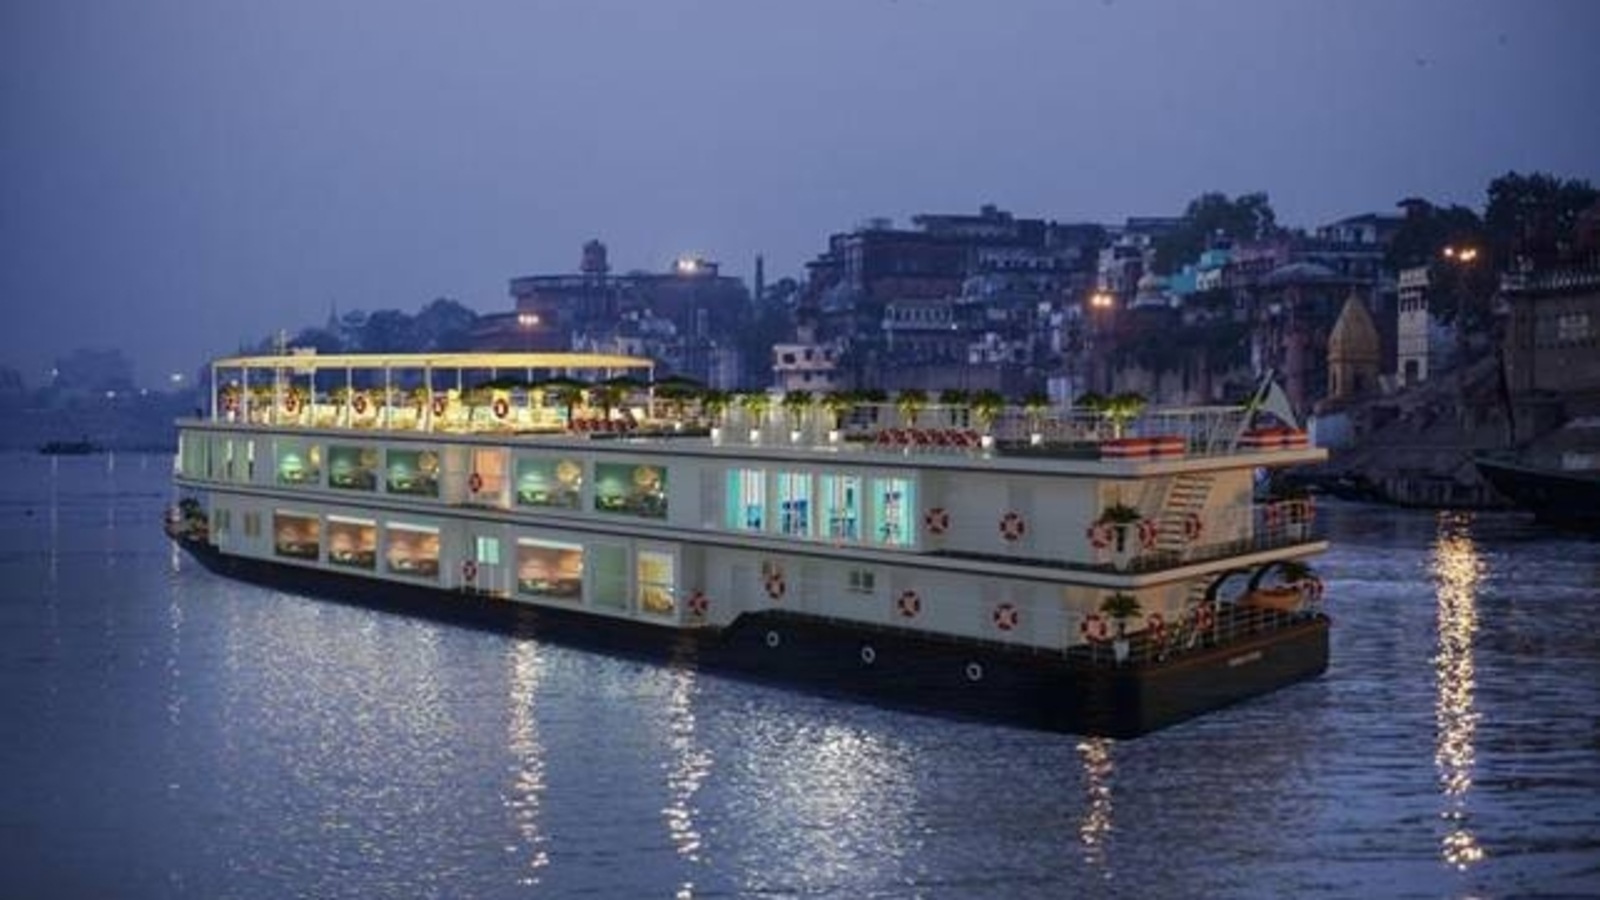 Ganga Vilas Cruise : दुनिया का सबसे लंबा रिवर क्रूज 23 जनवरी को पहुंचेगा झारखंड - Ganga Vilas Cruise: The world's longest river cruise will reach Jharkhand on January 23